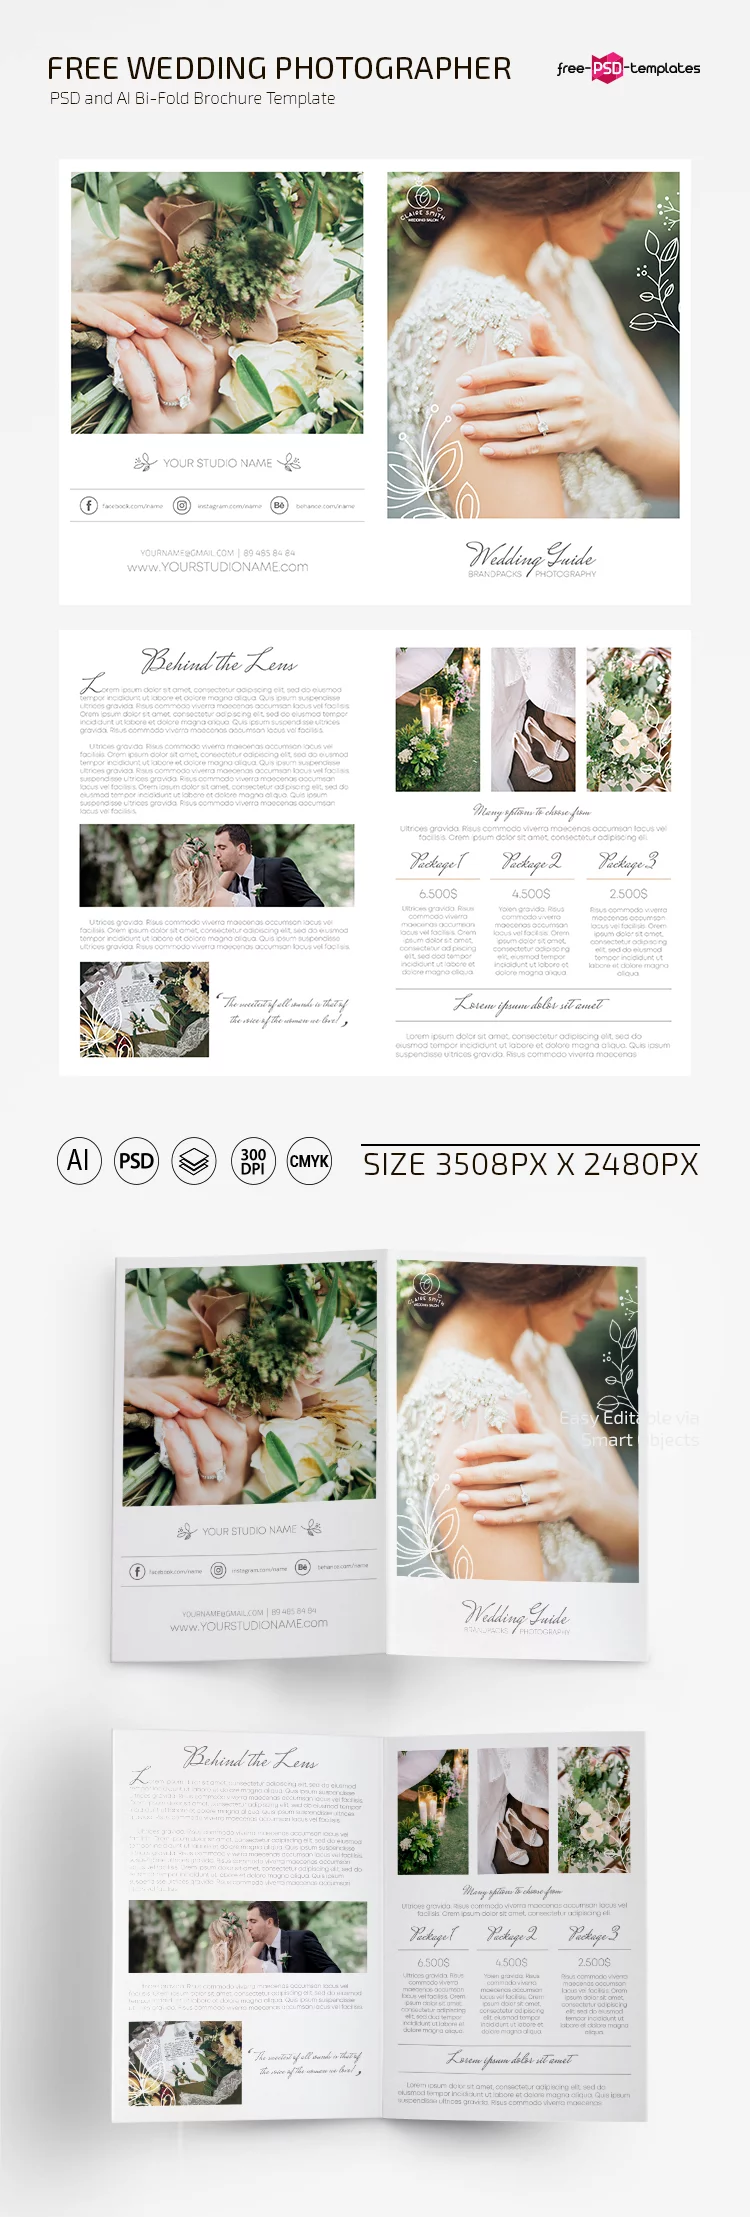 Free Wedding Photographer Bi-fold Brochure Template in PSD + EPS